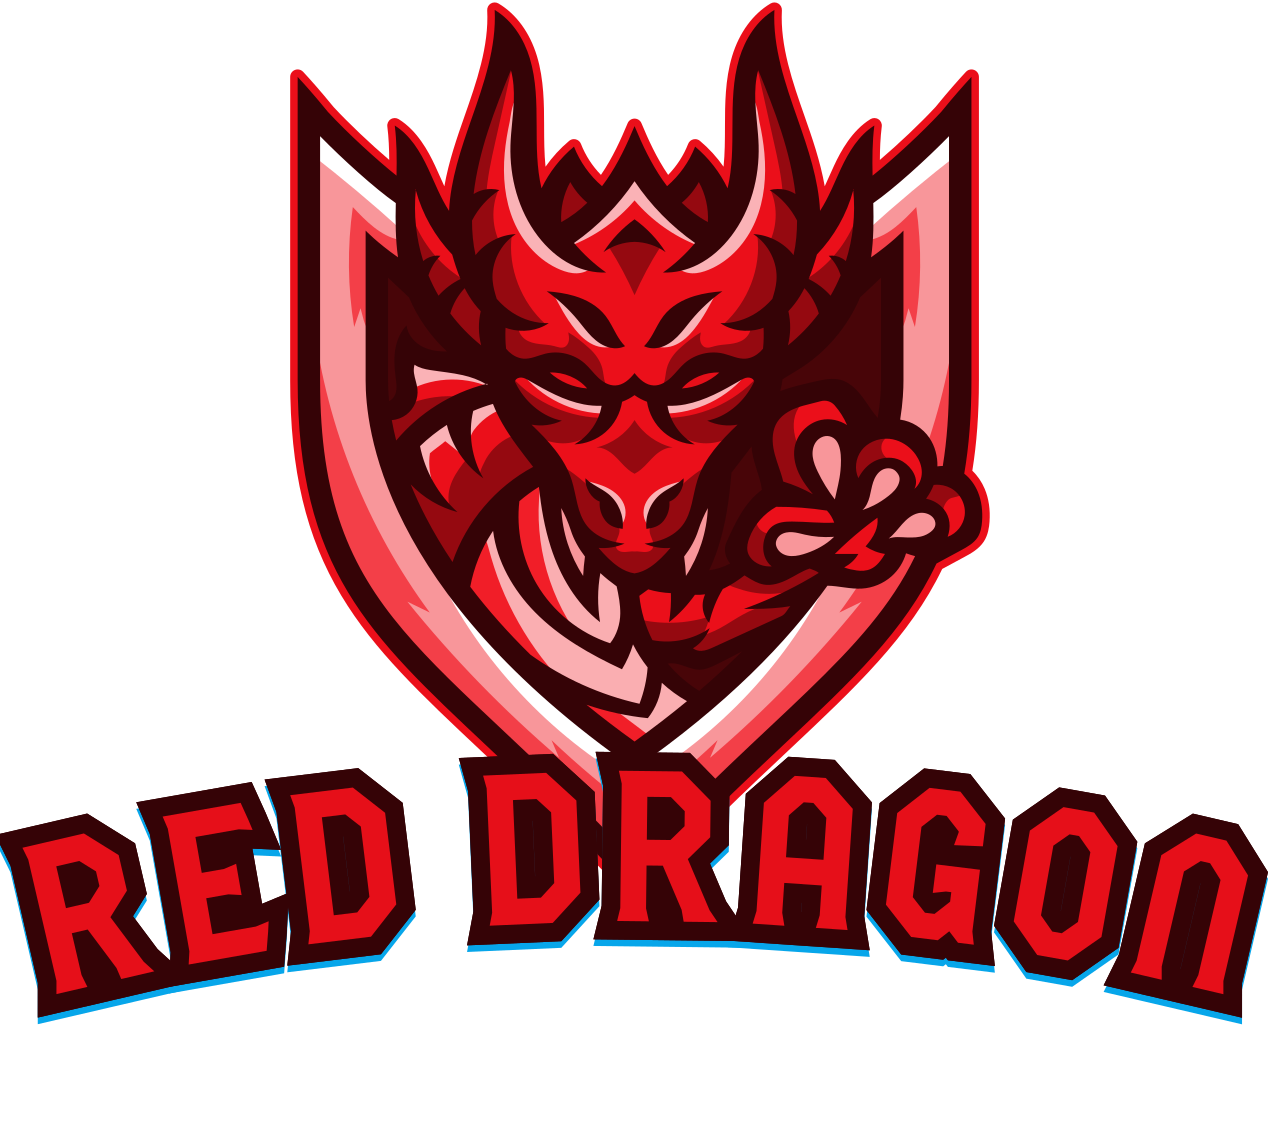 RED DRAGON DISTRIBUTION 's logo